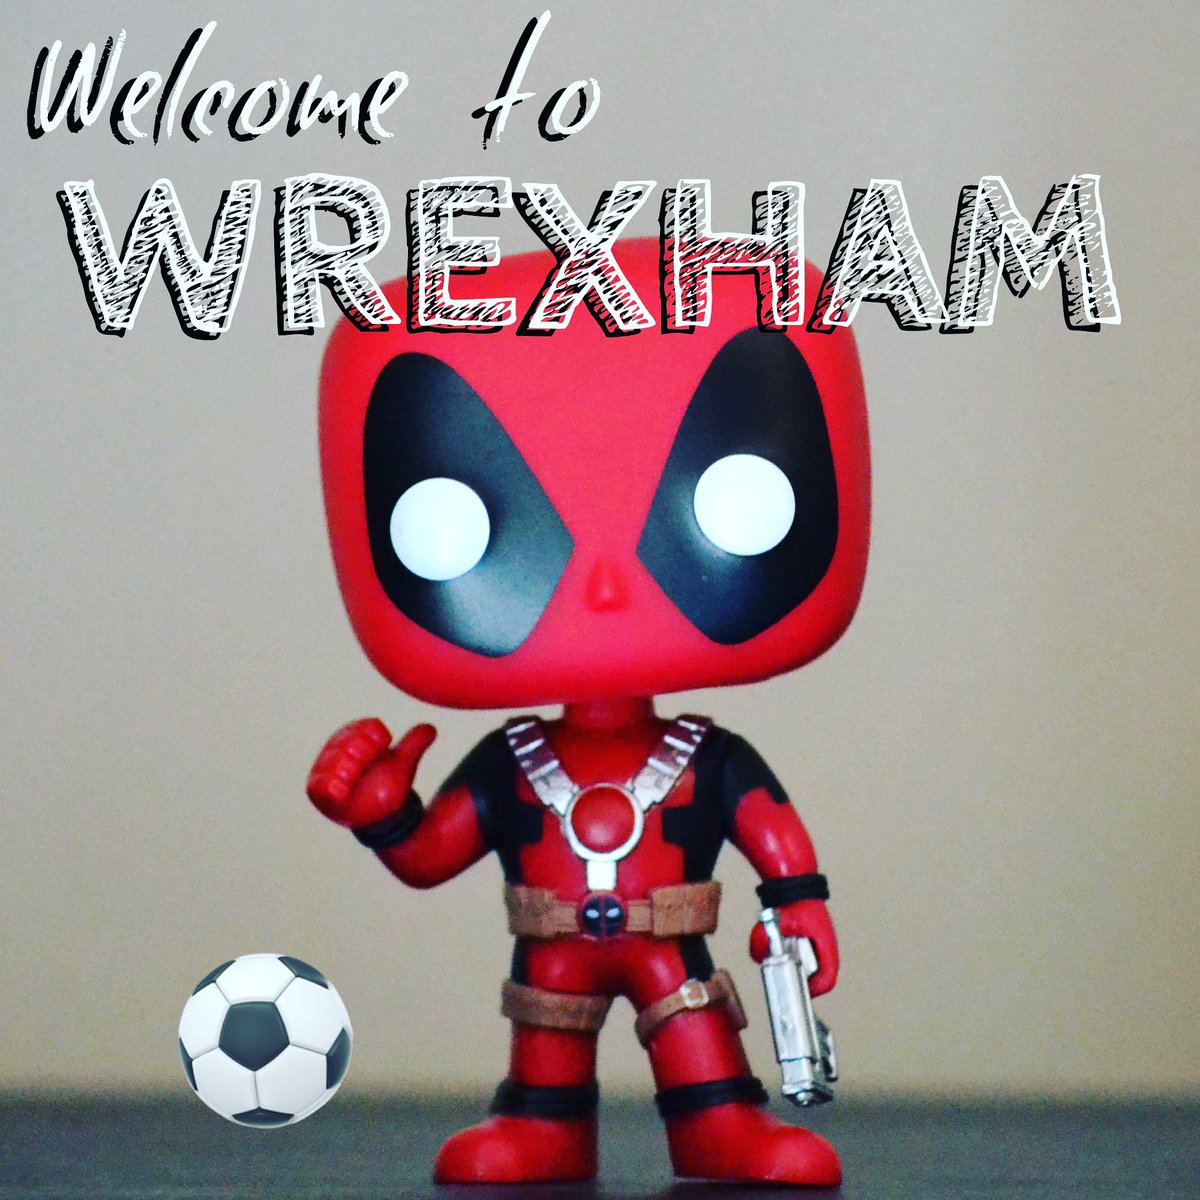 We started watching “Welcome to Wrexham” on Hulu! ⚽️ #WelcomeToWrexham #RyanReynolds #RobMcElhenny #Wrexham #wrexhamafc #hulu #soccer #football